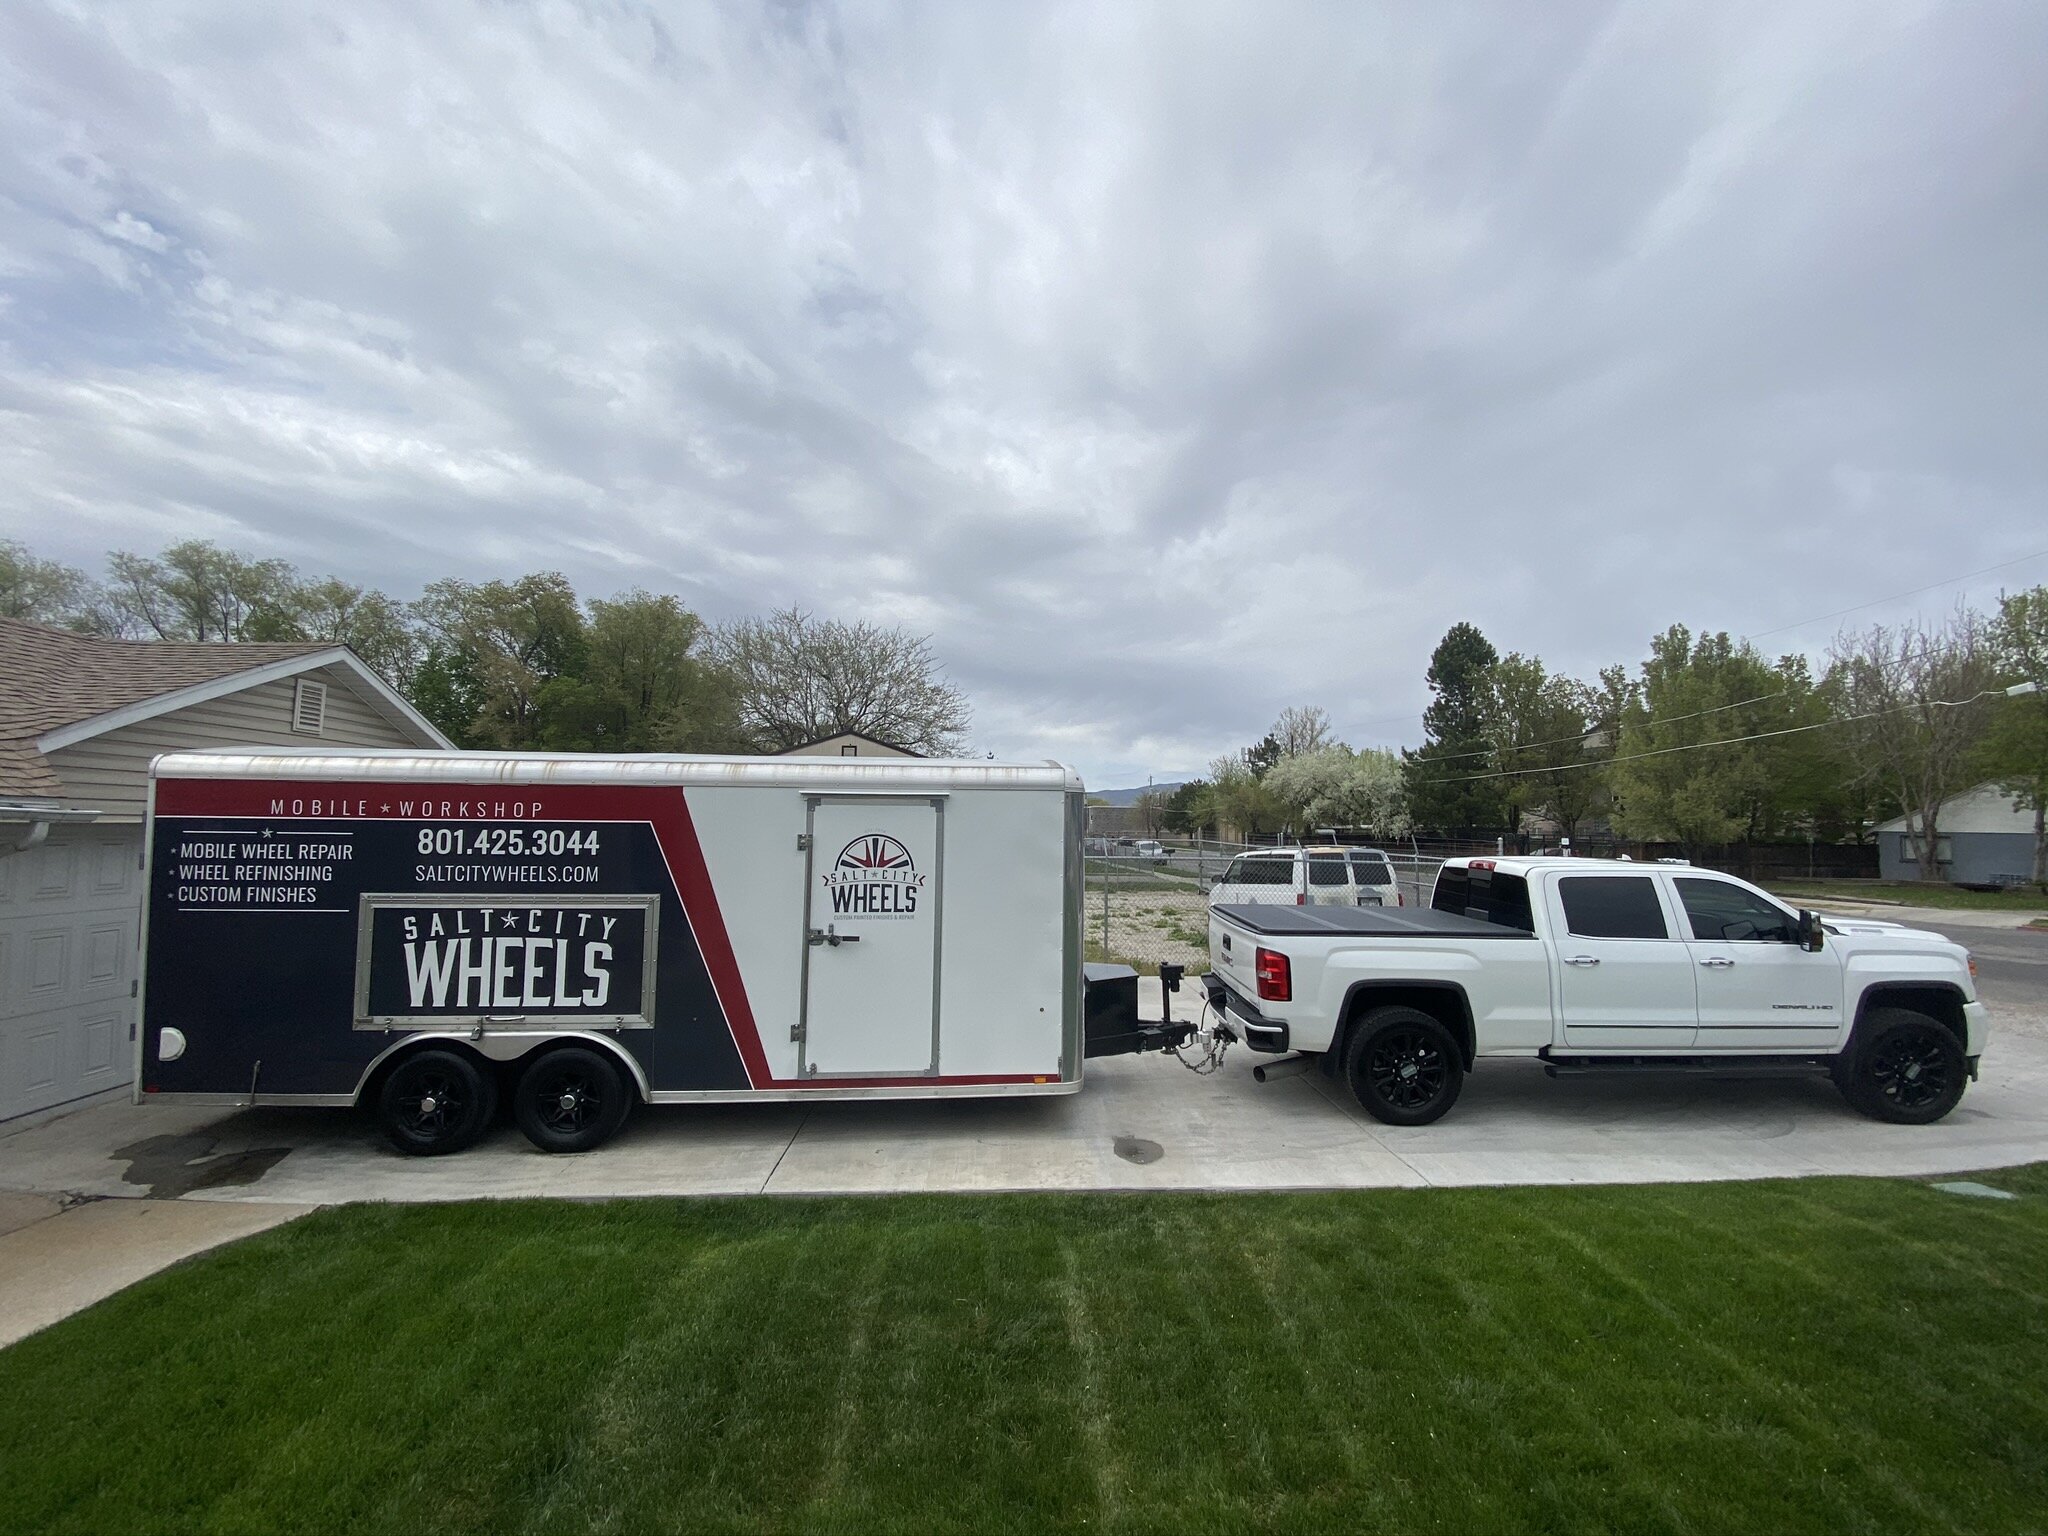 Mobile Wheel Repair Workshop